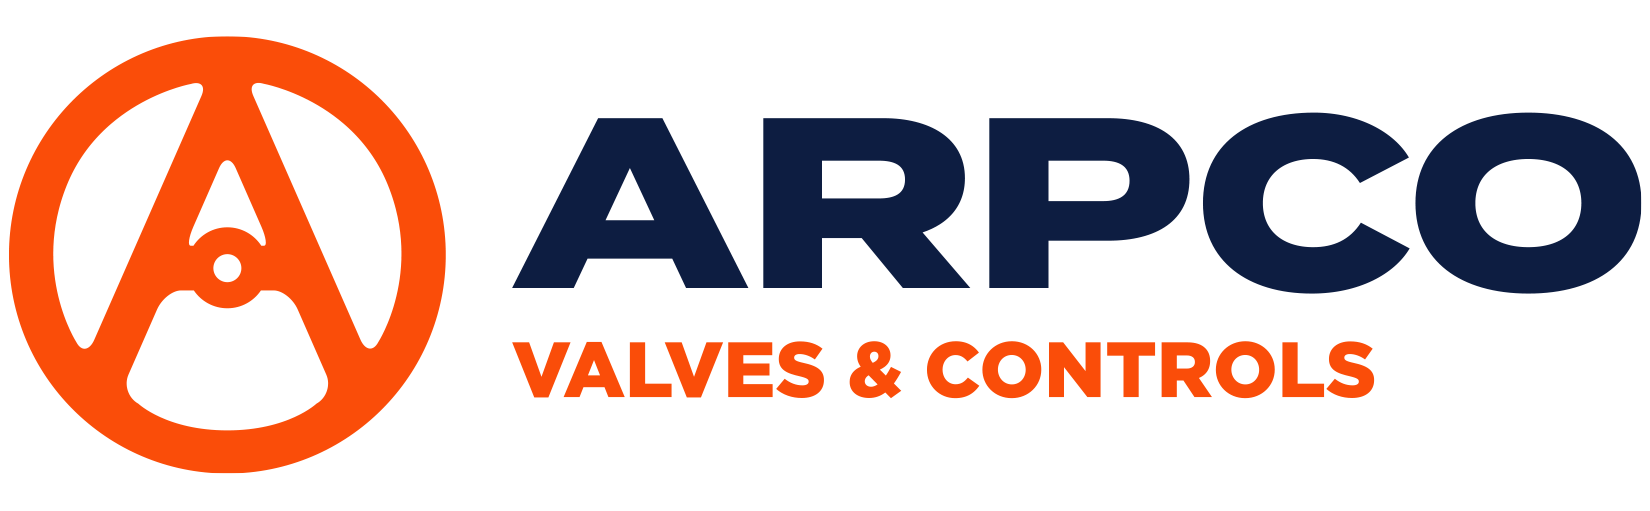 Arpco Valves & Controls logo